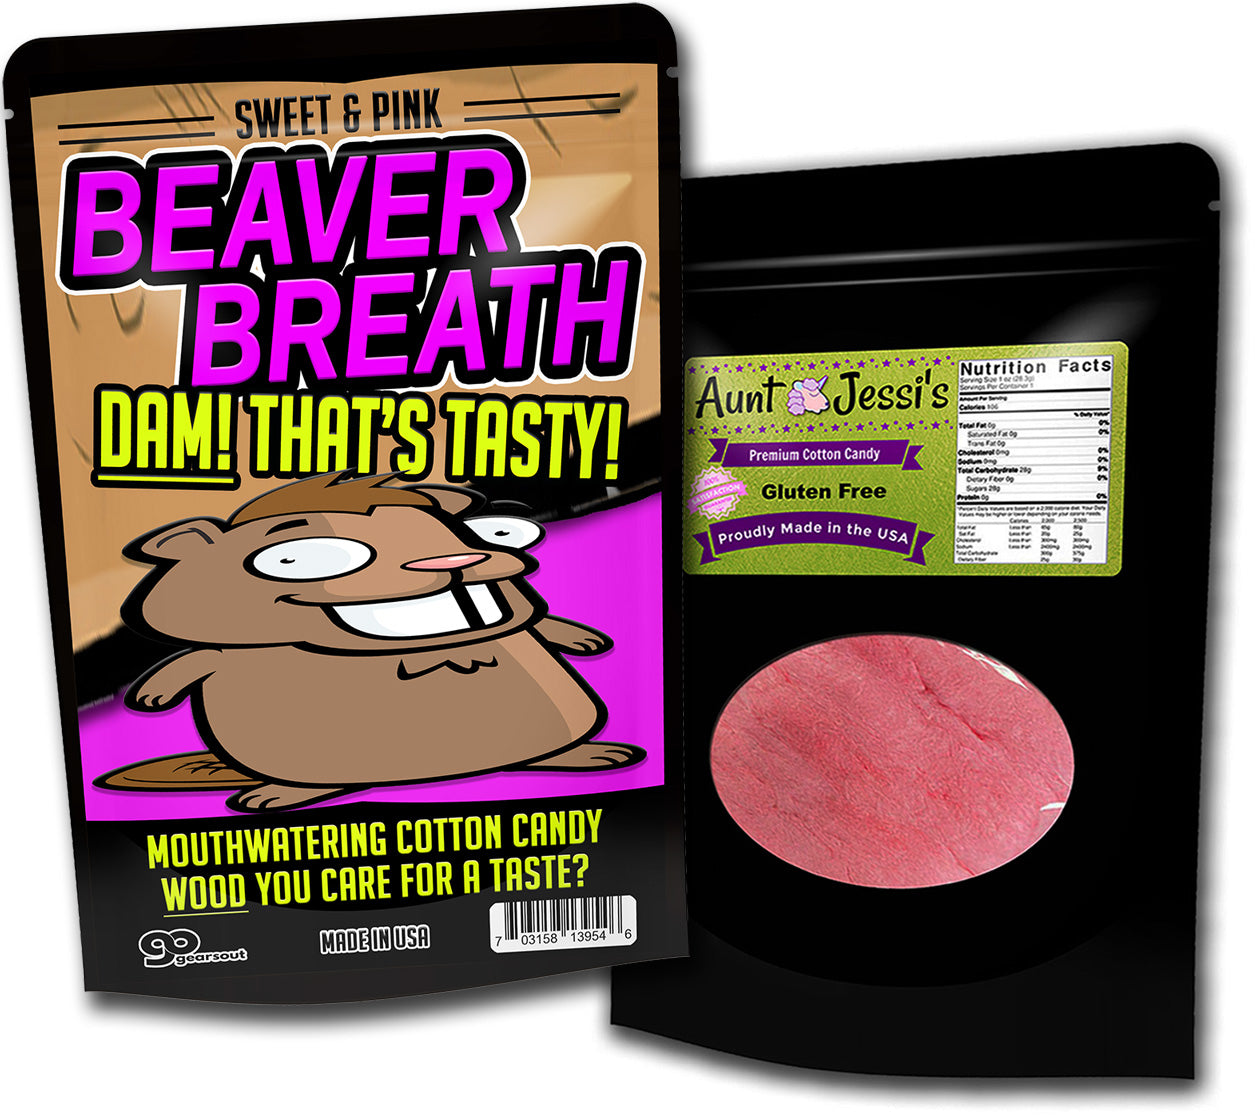 Beaver Breath Cotton Candy